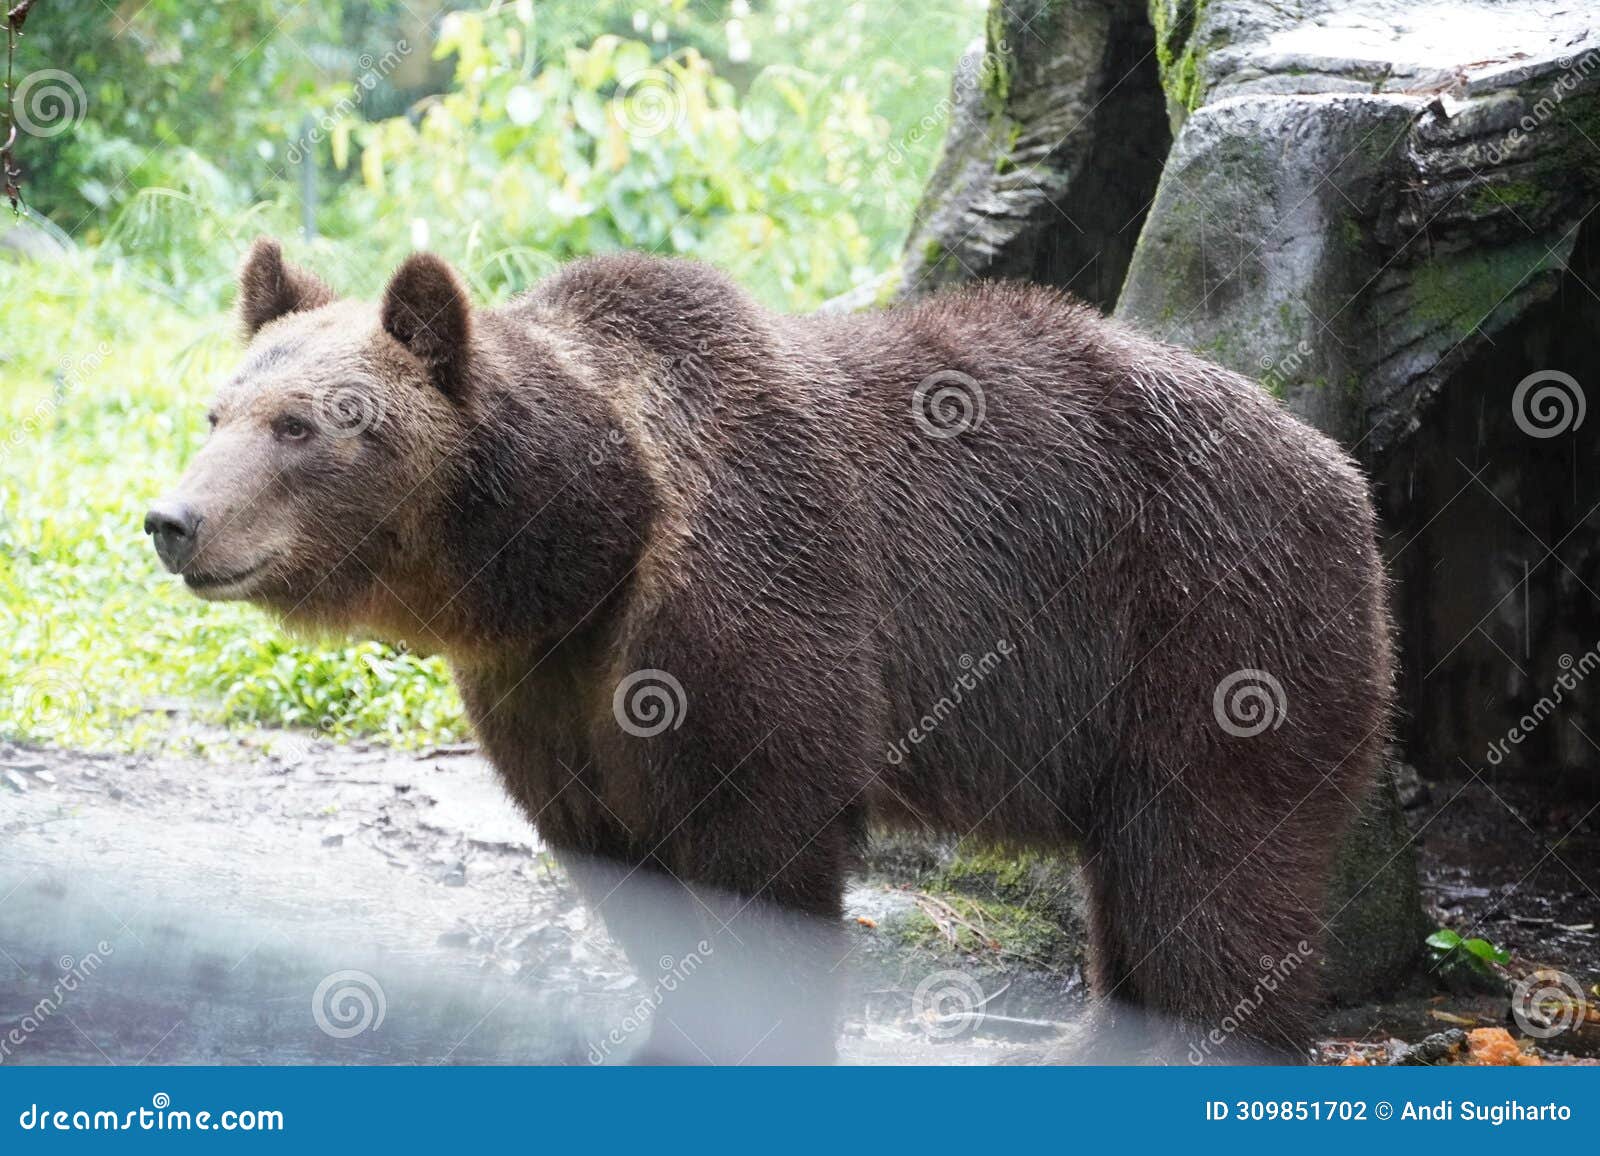 brown bear at indonesia